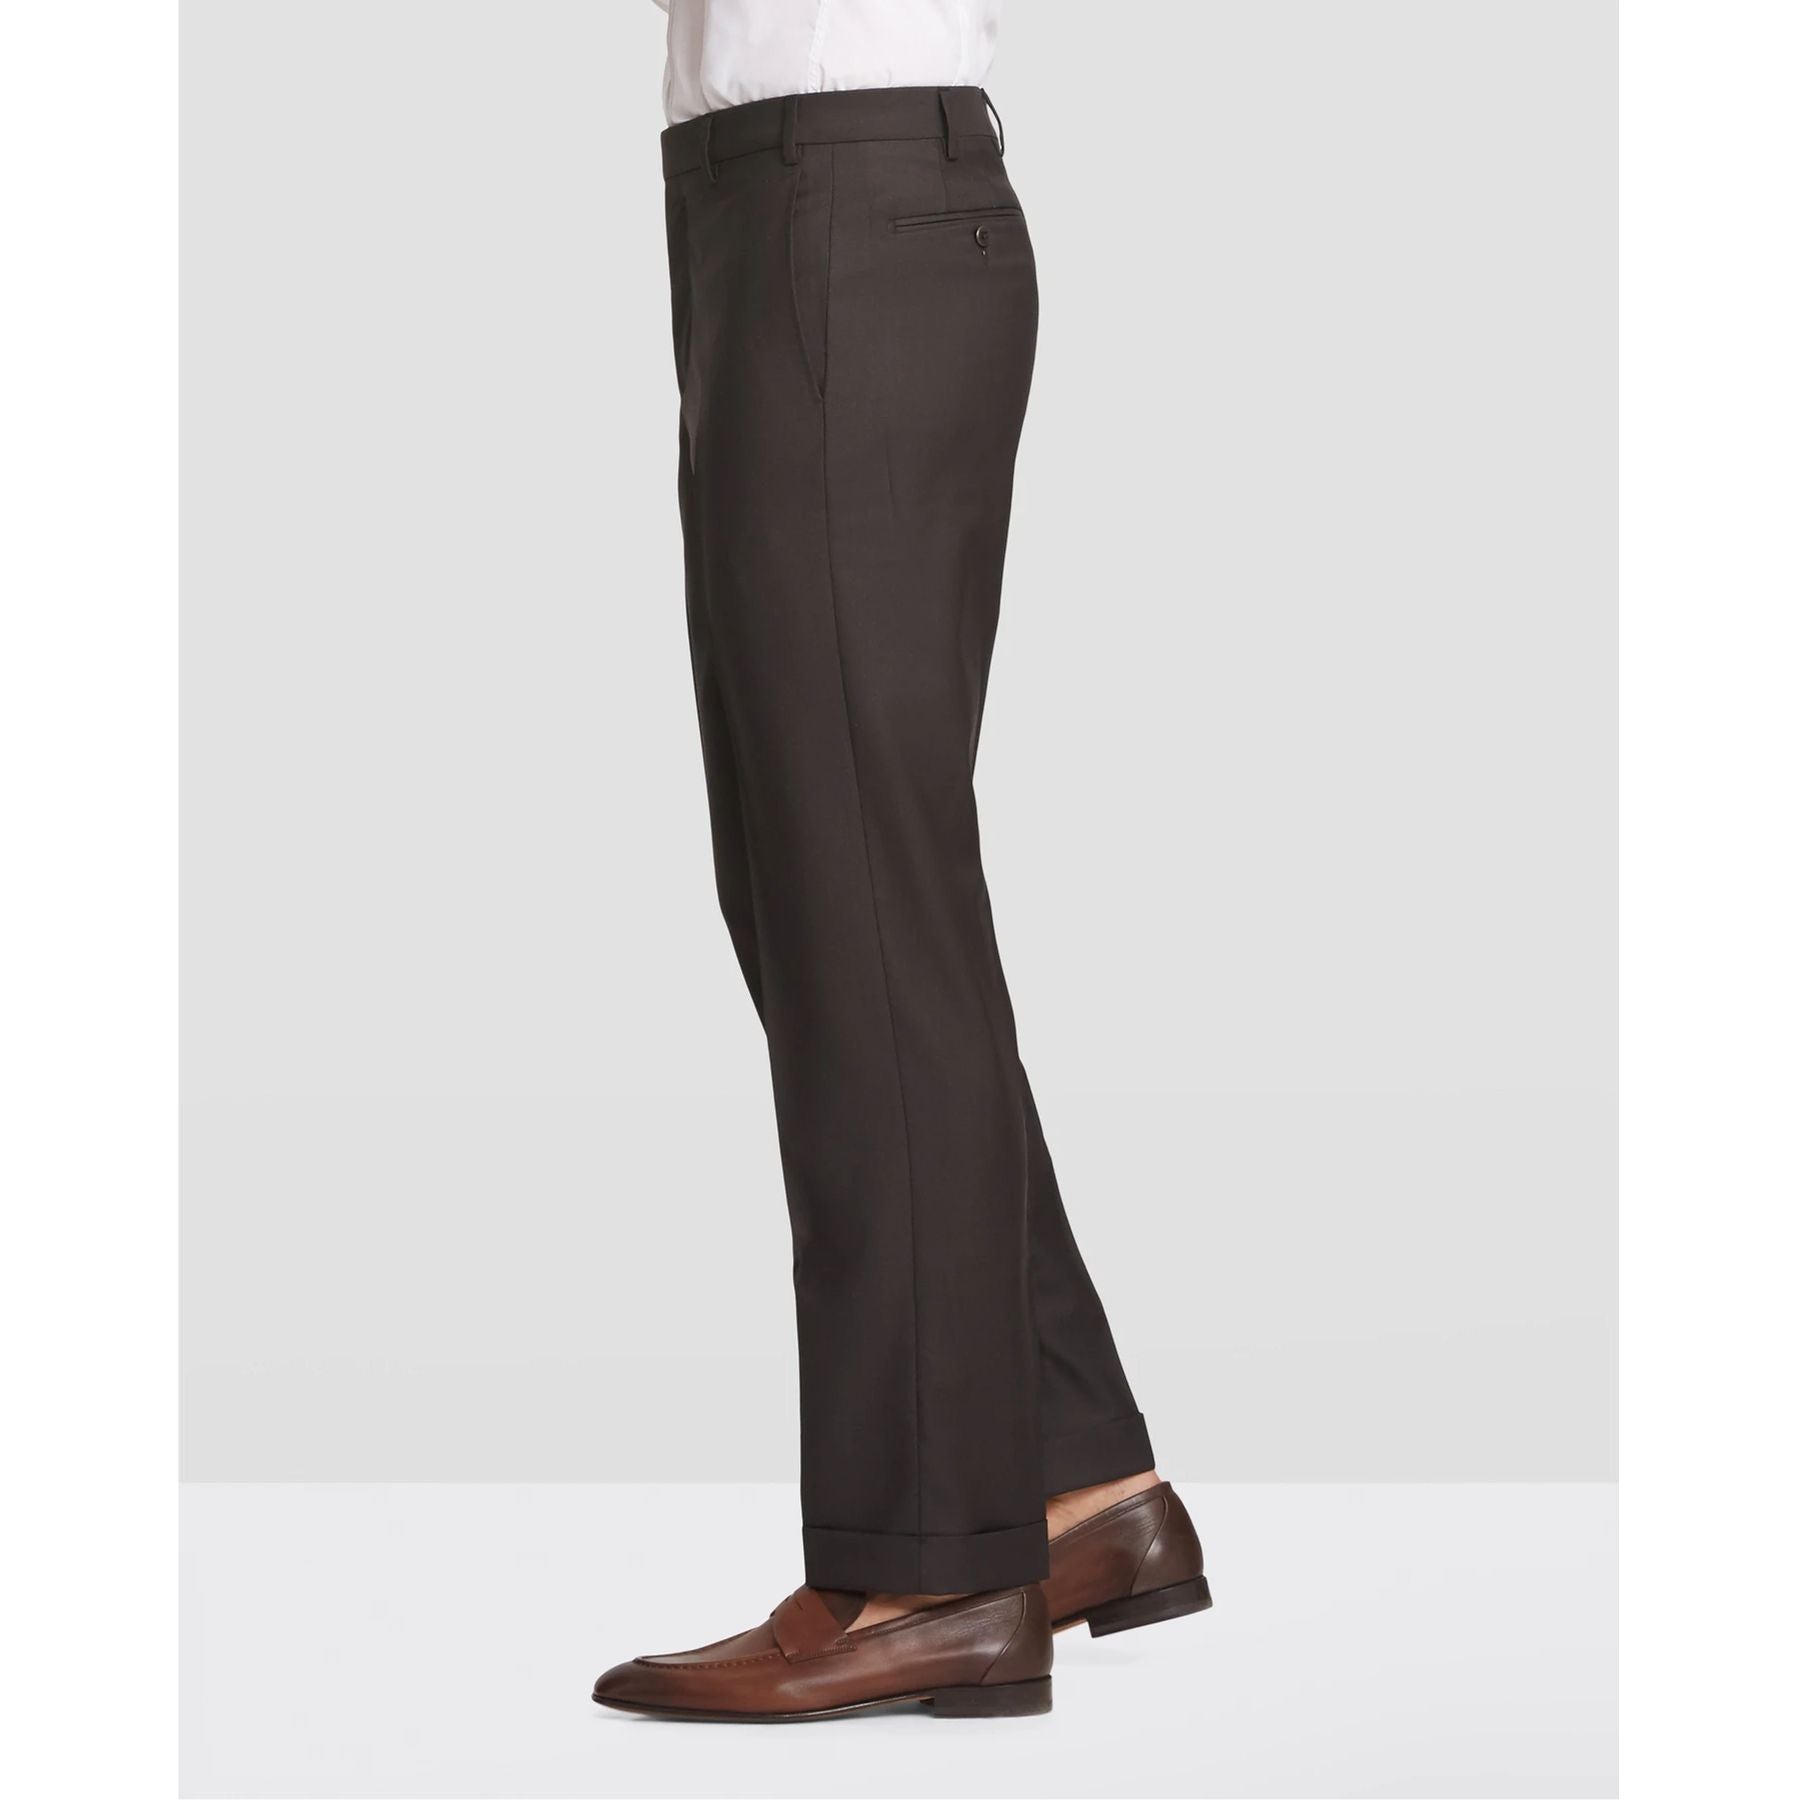 Chocolate brown flat-front regular fit Women Dress Pants